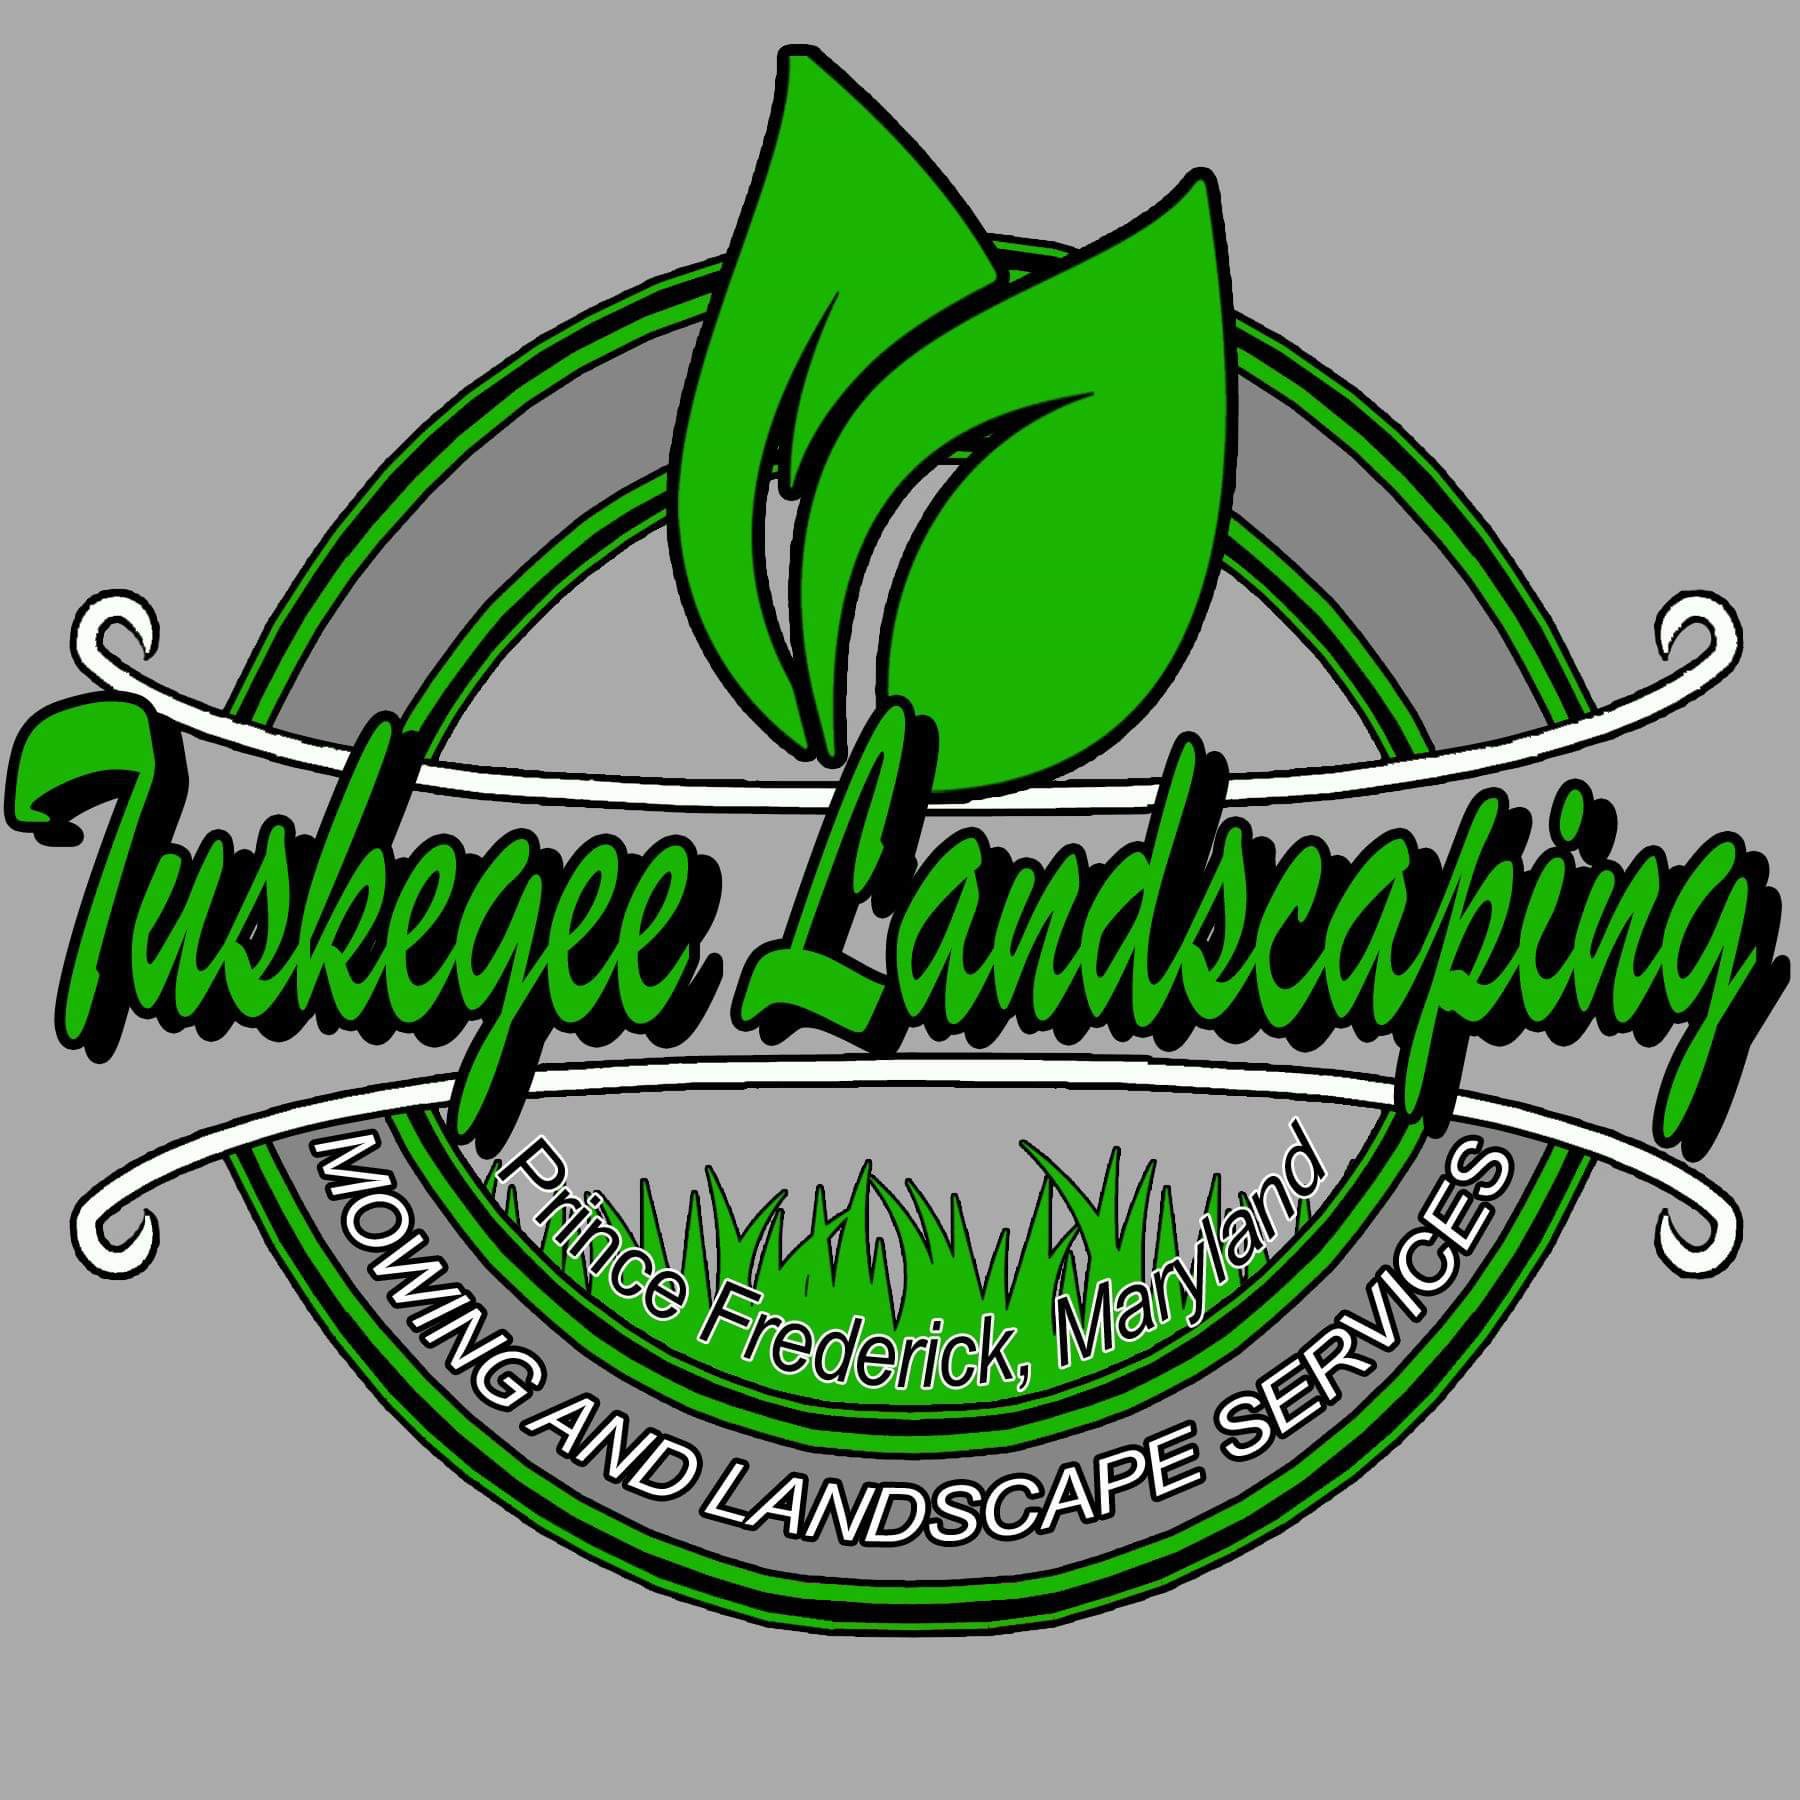 Tuskegee Landscaping, LLC